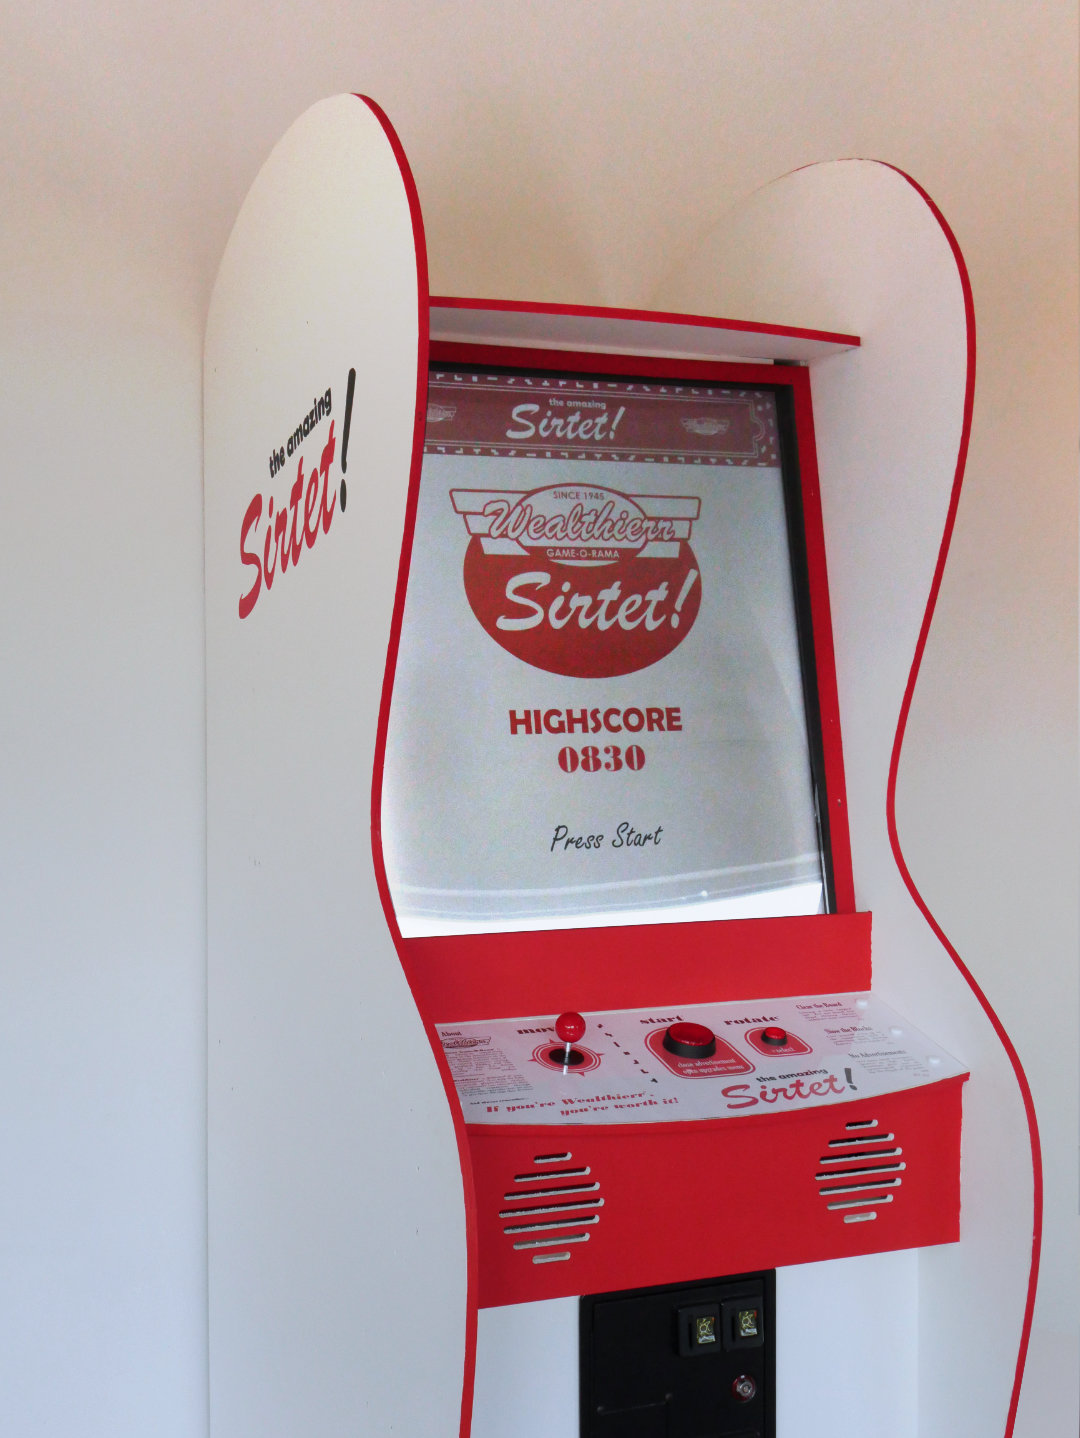 The Amazing Sirtet! arcade machine.